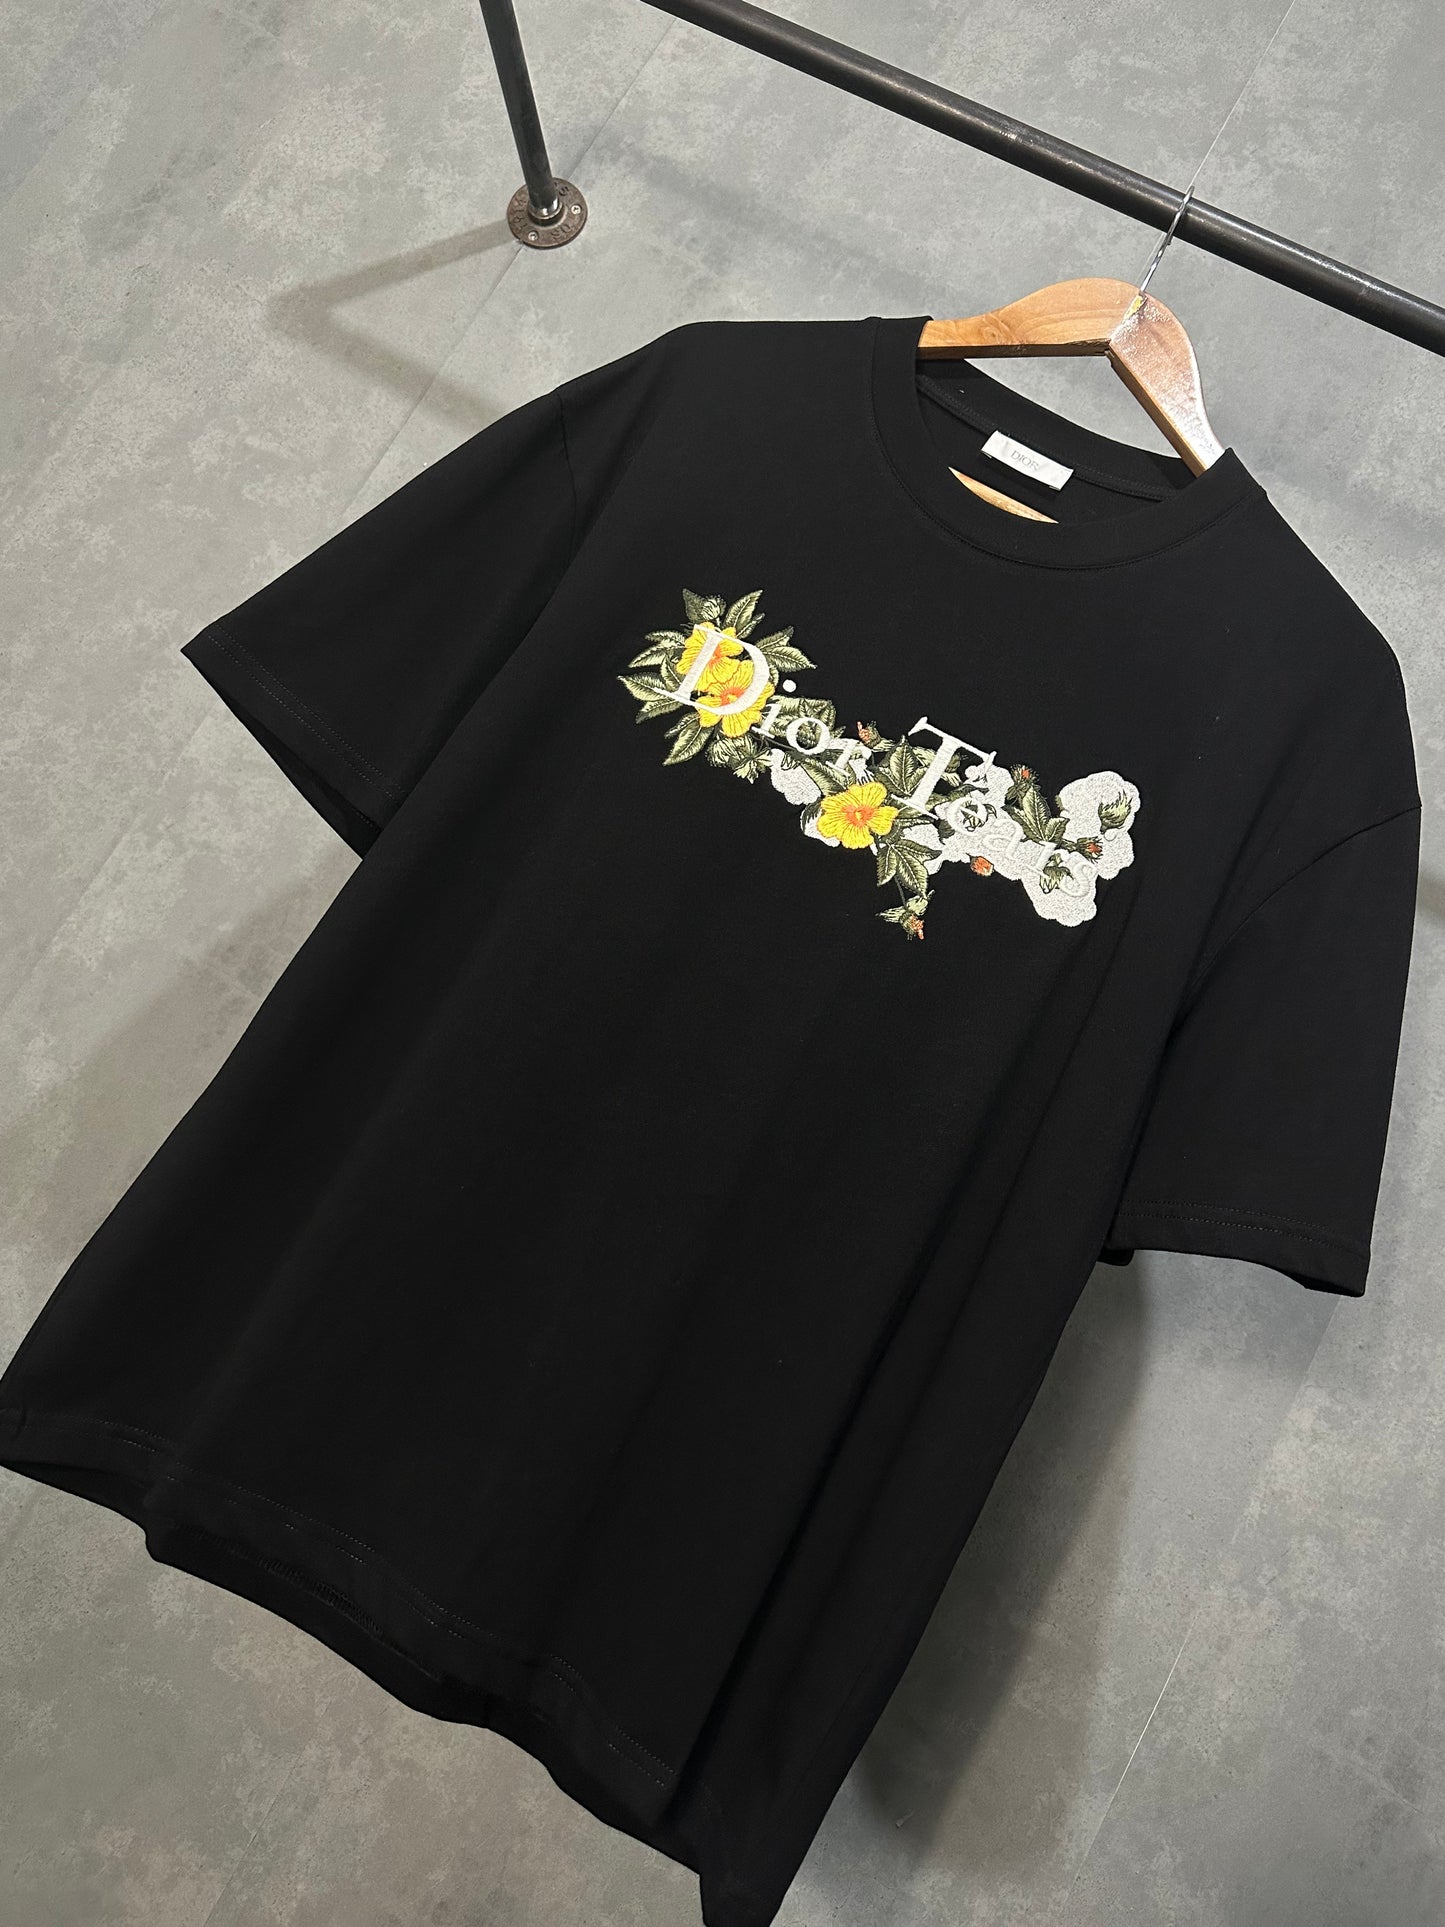 Dior Tears T-Shirt (Black)